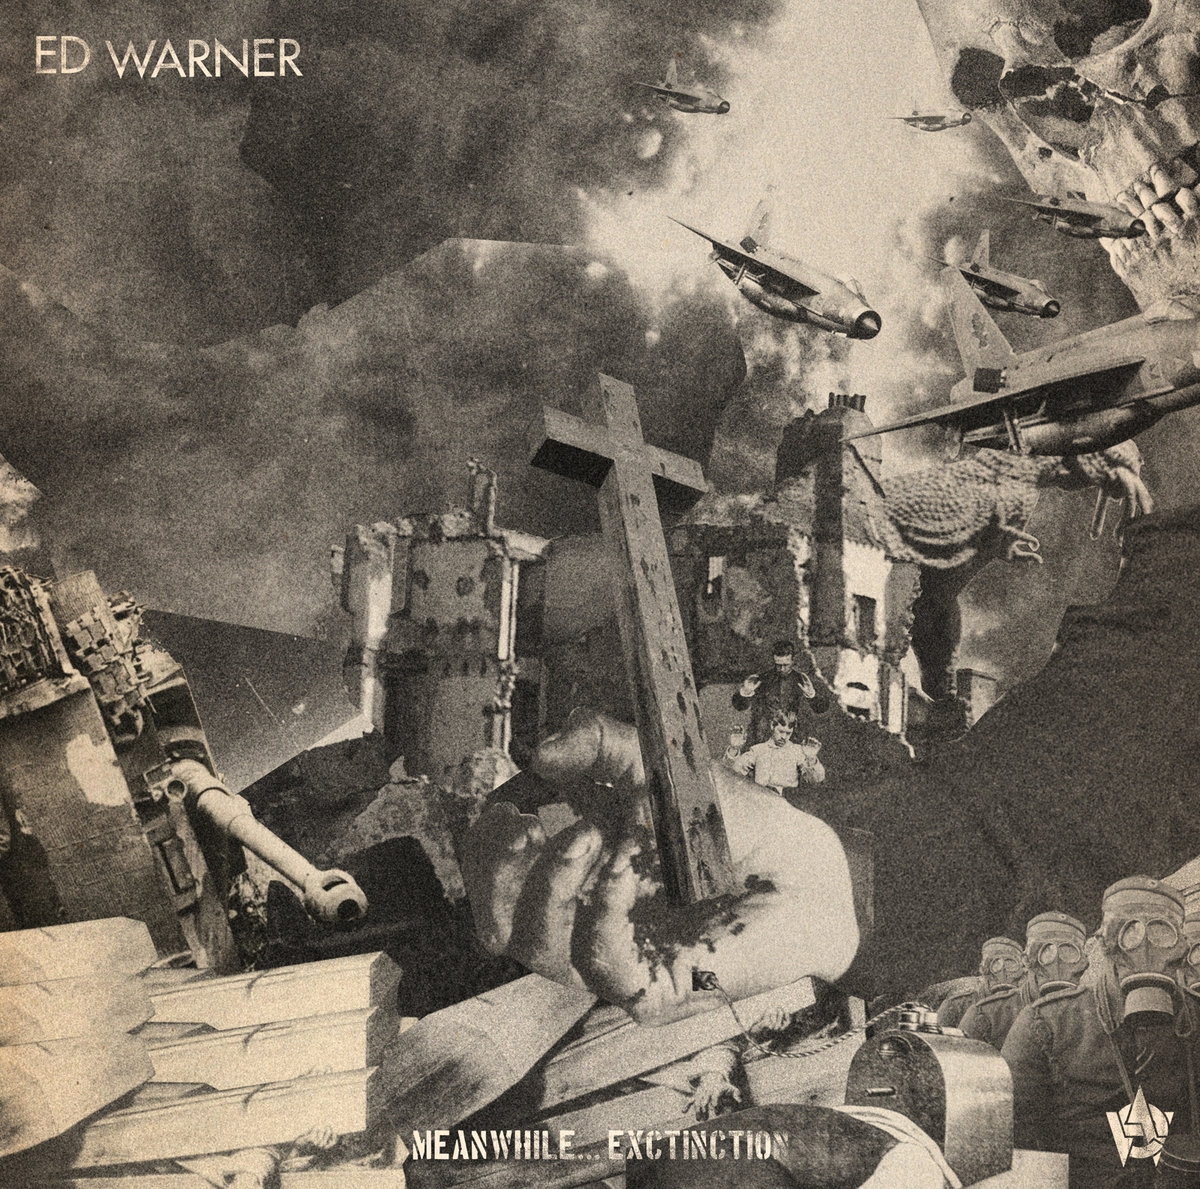 ED WARNER "Meanwhile...extinction" - 33T